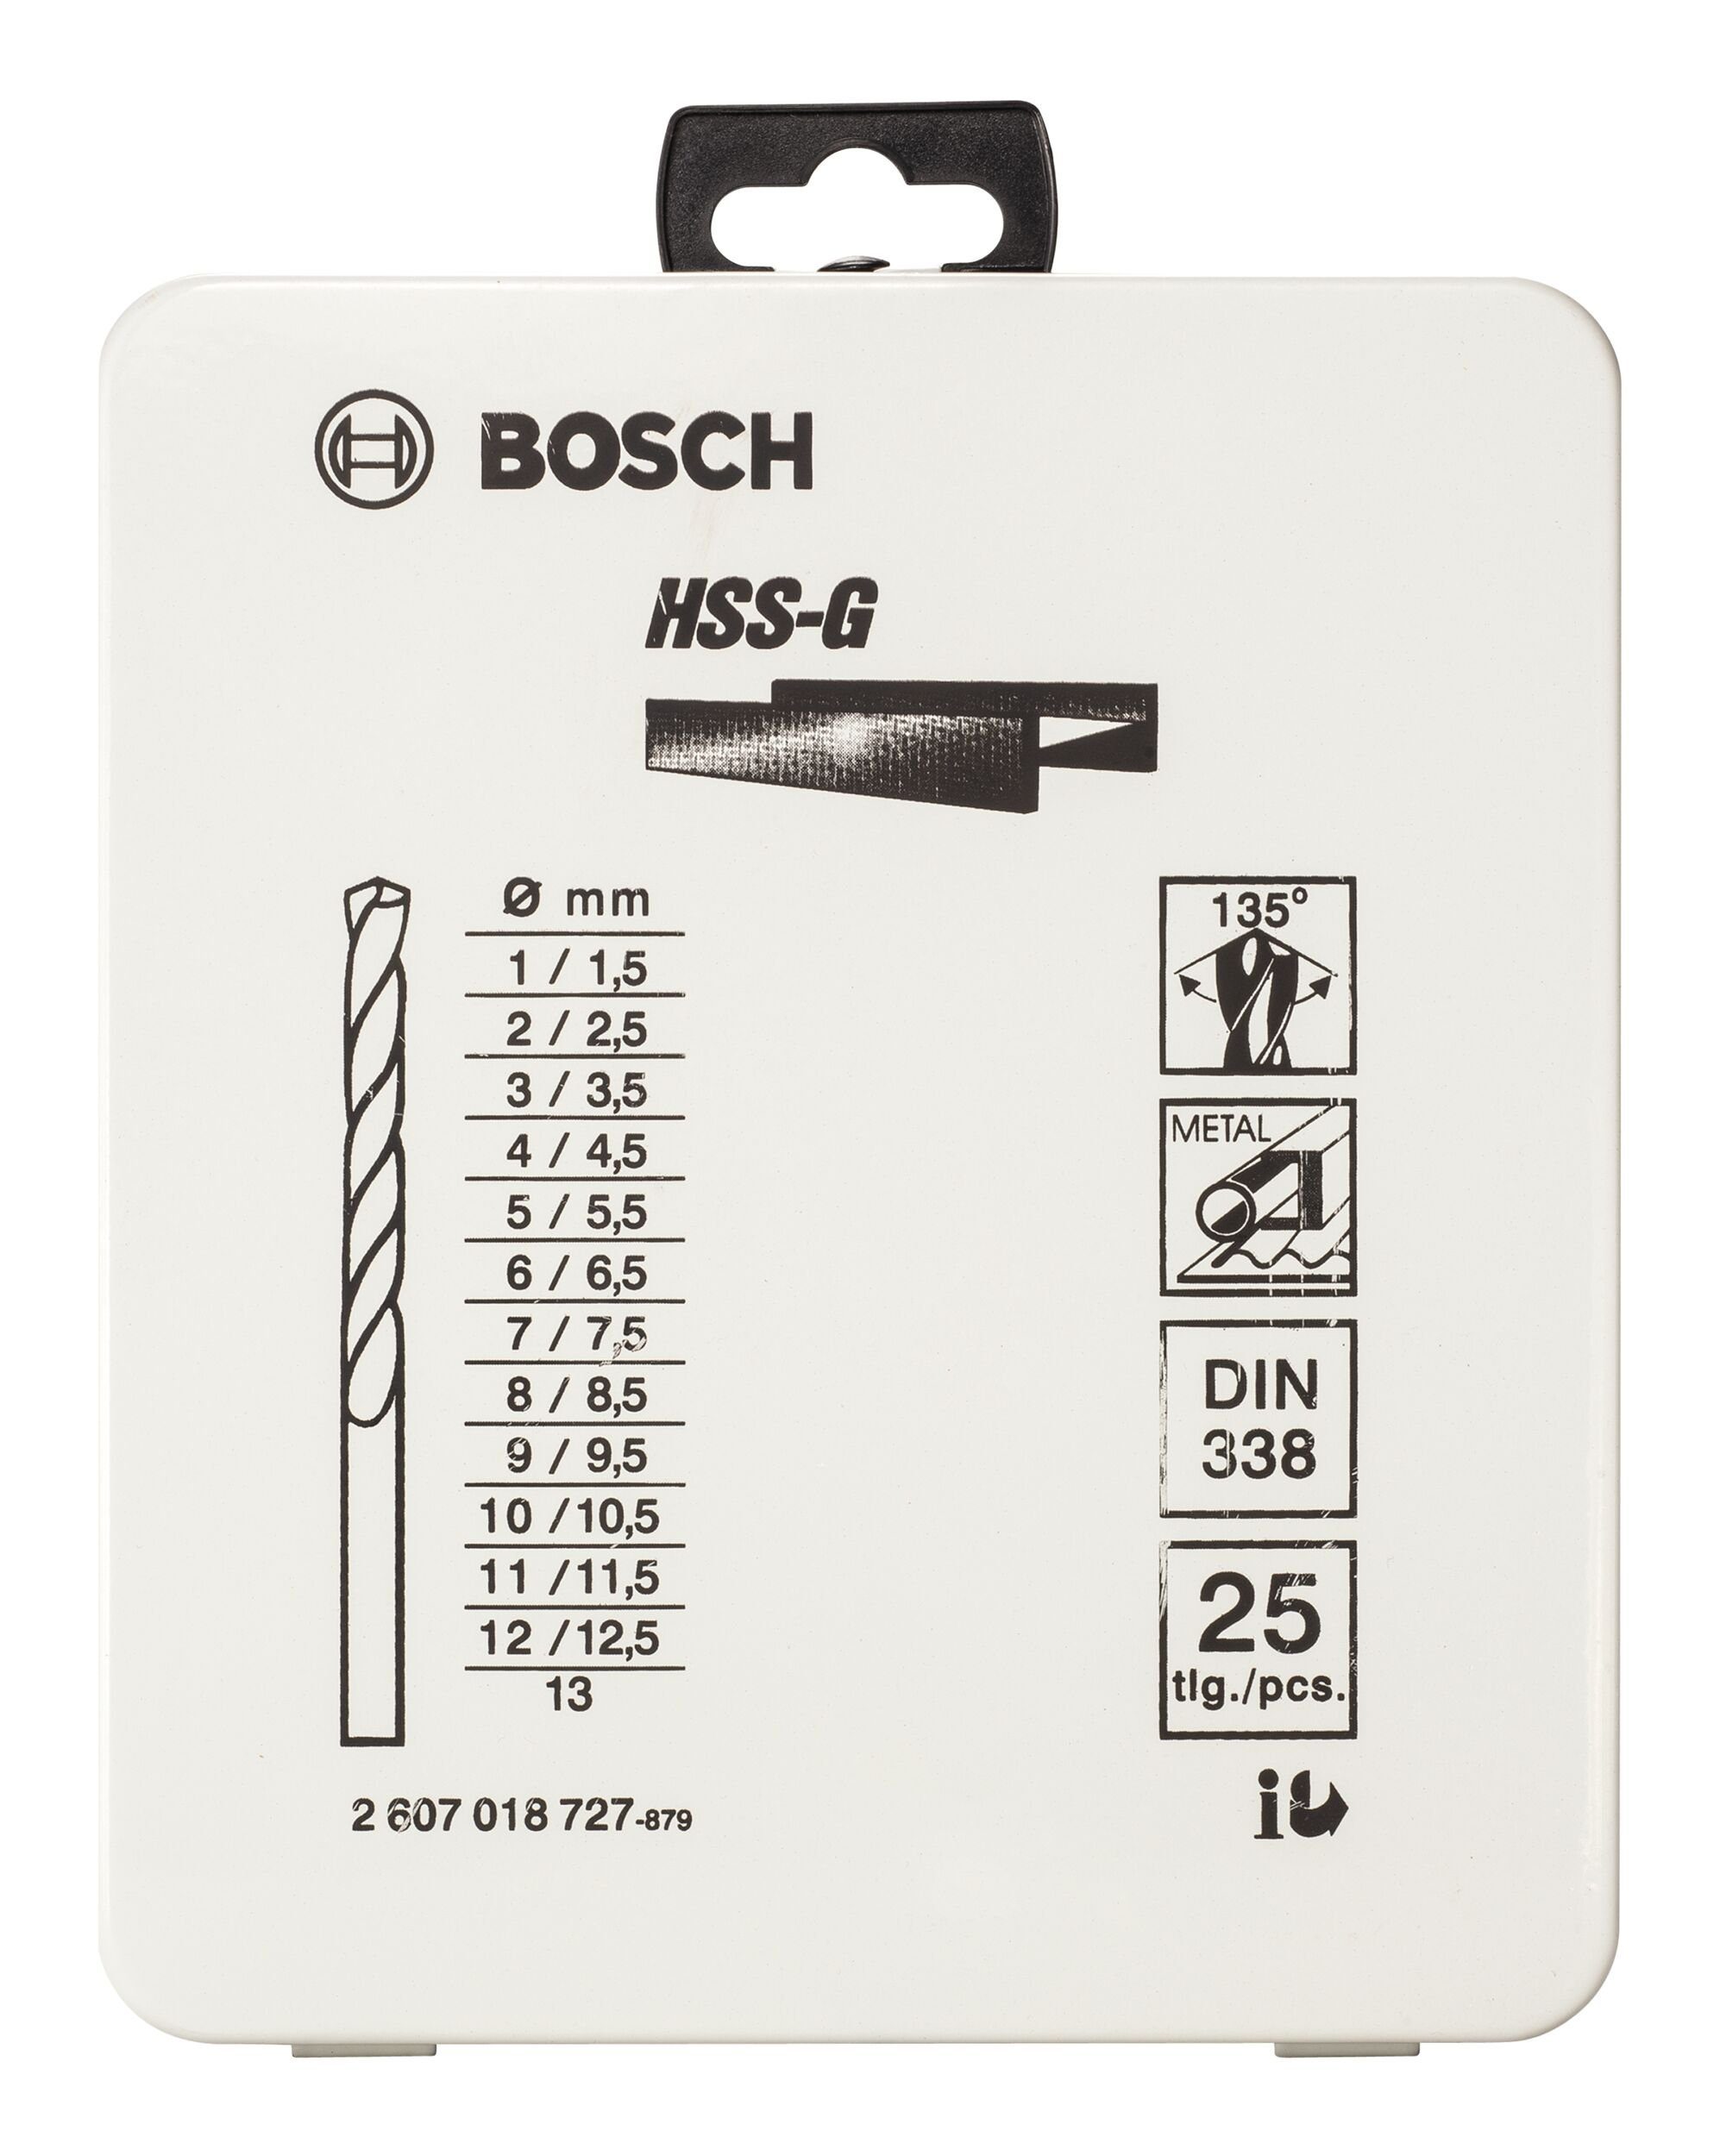 25-teilig 13 Metallkassette in 1 Set mm - HSS-G BOSCH Metallbohrer, - 135° -